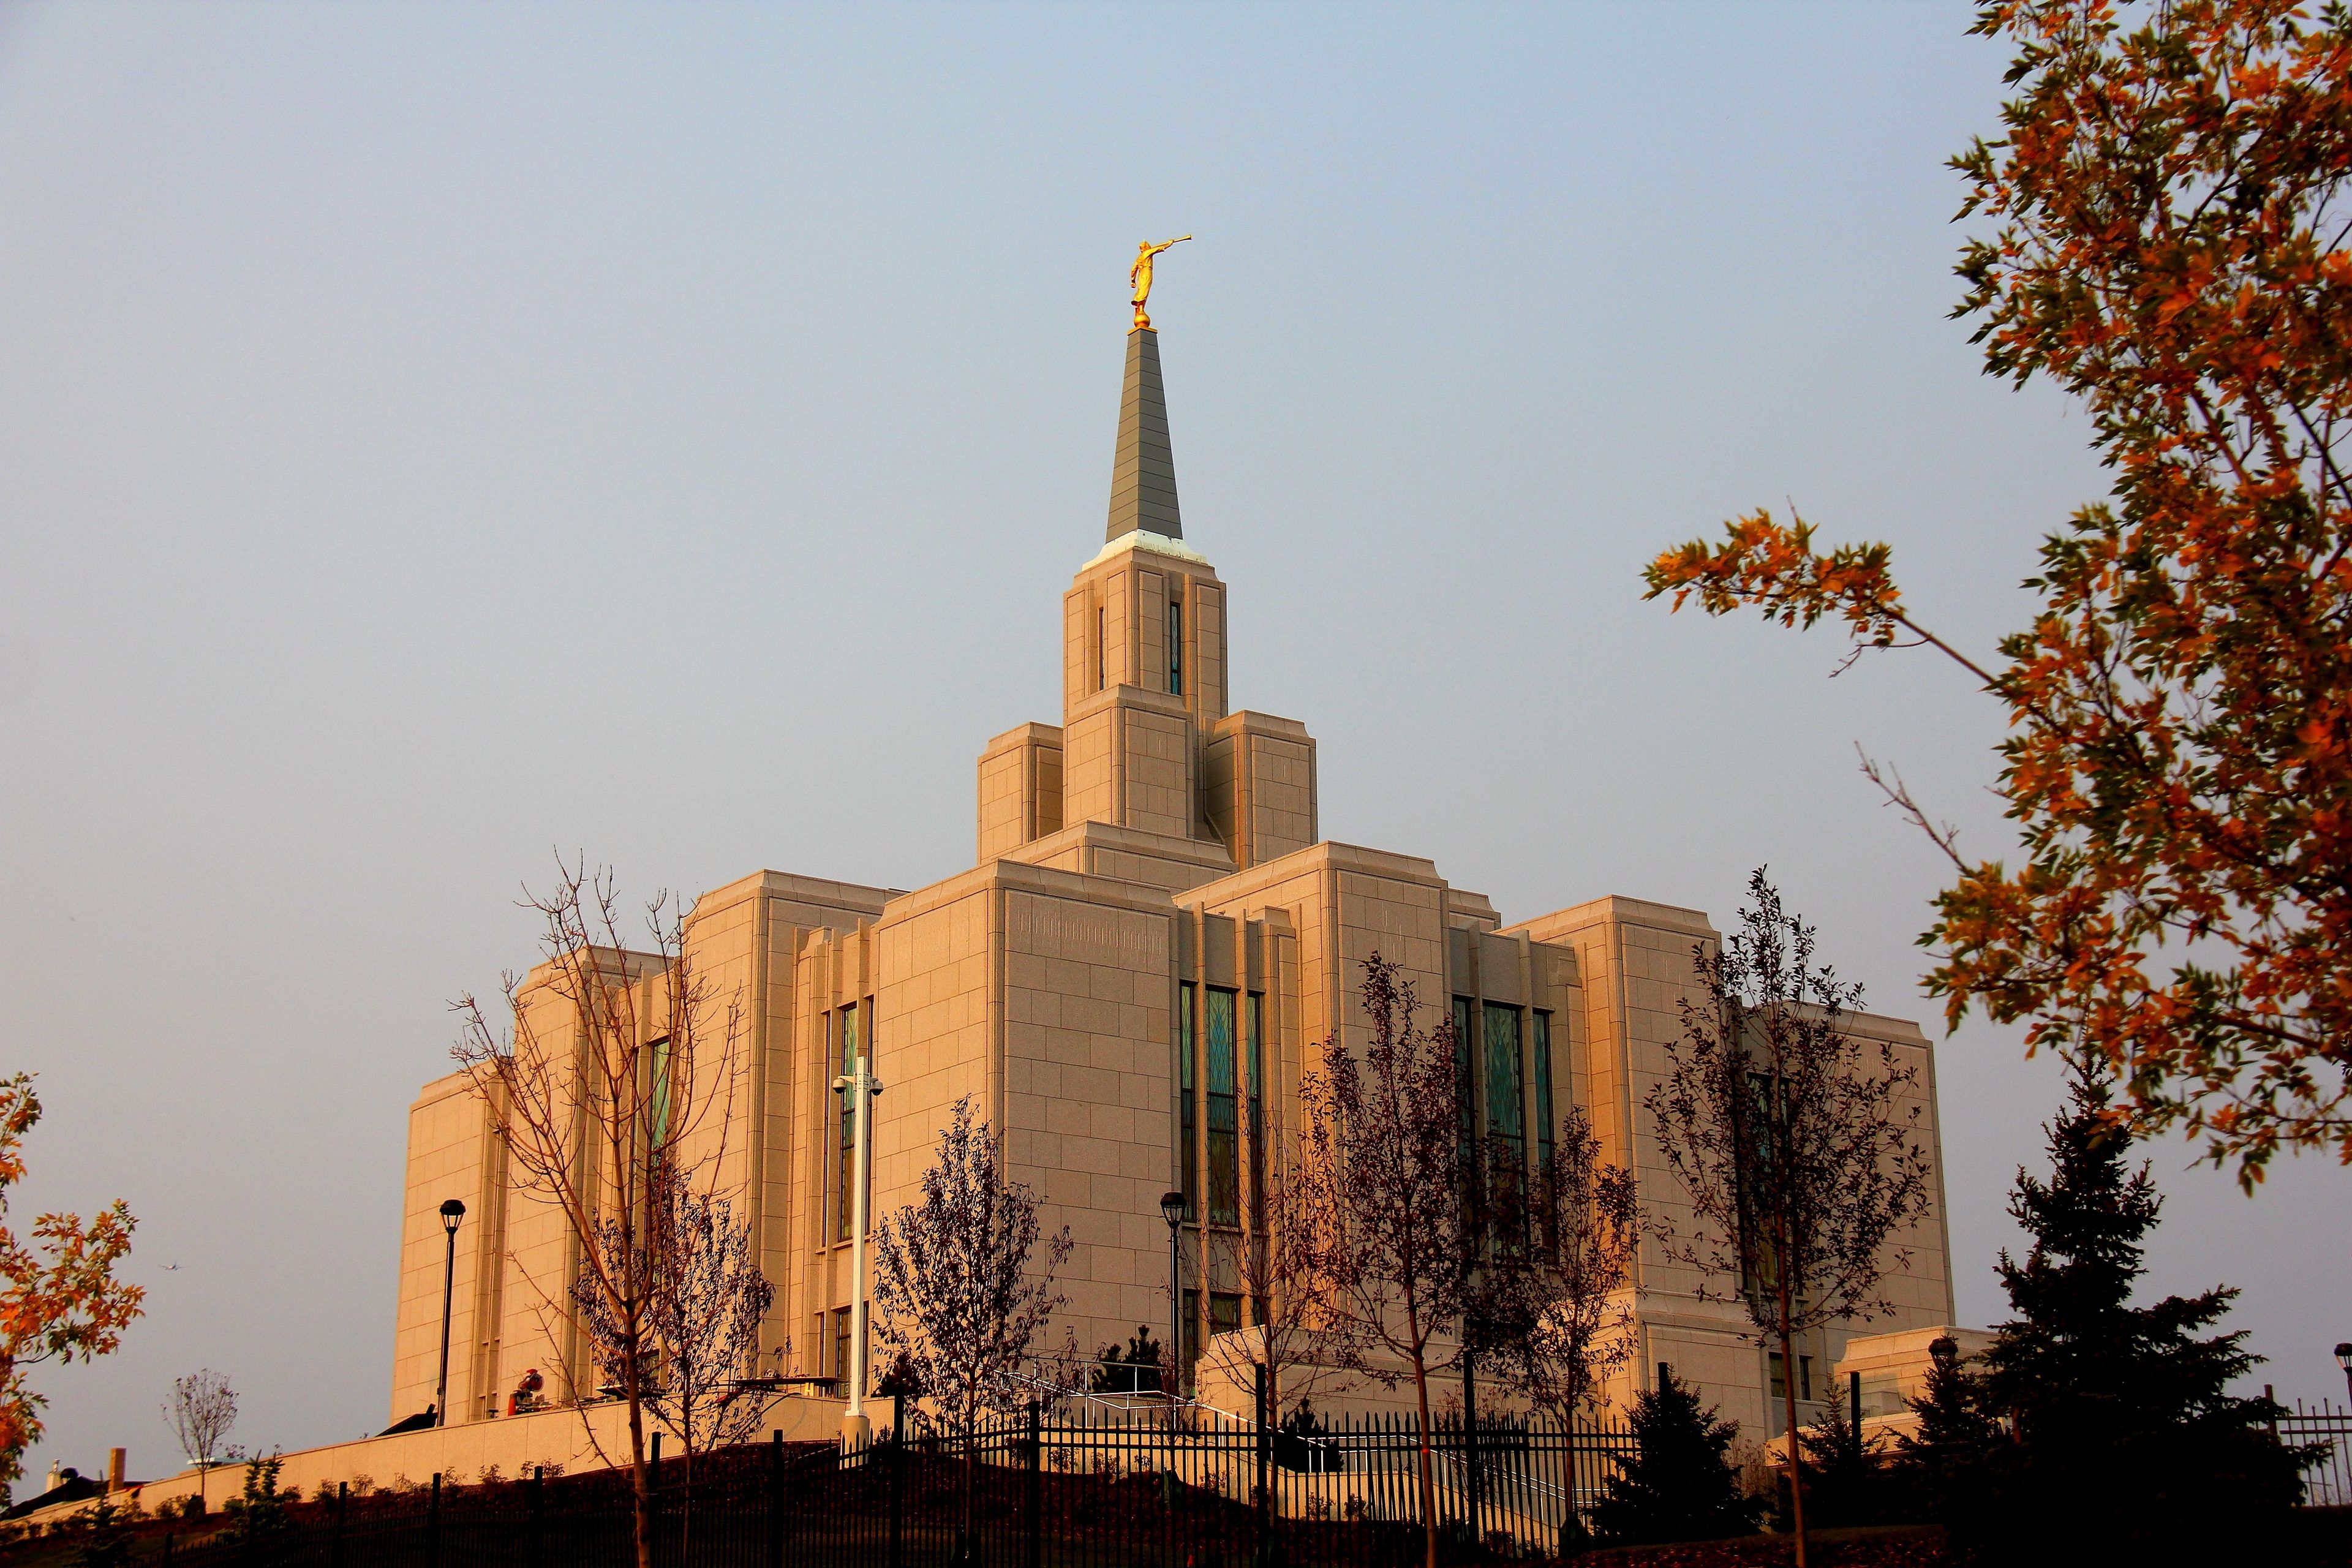 The Calgary Alberta Temple during the autumn season.